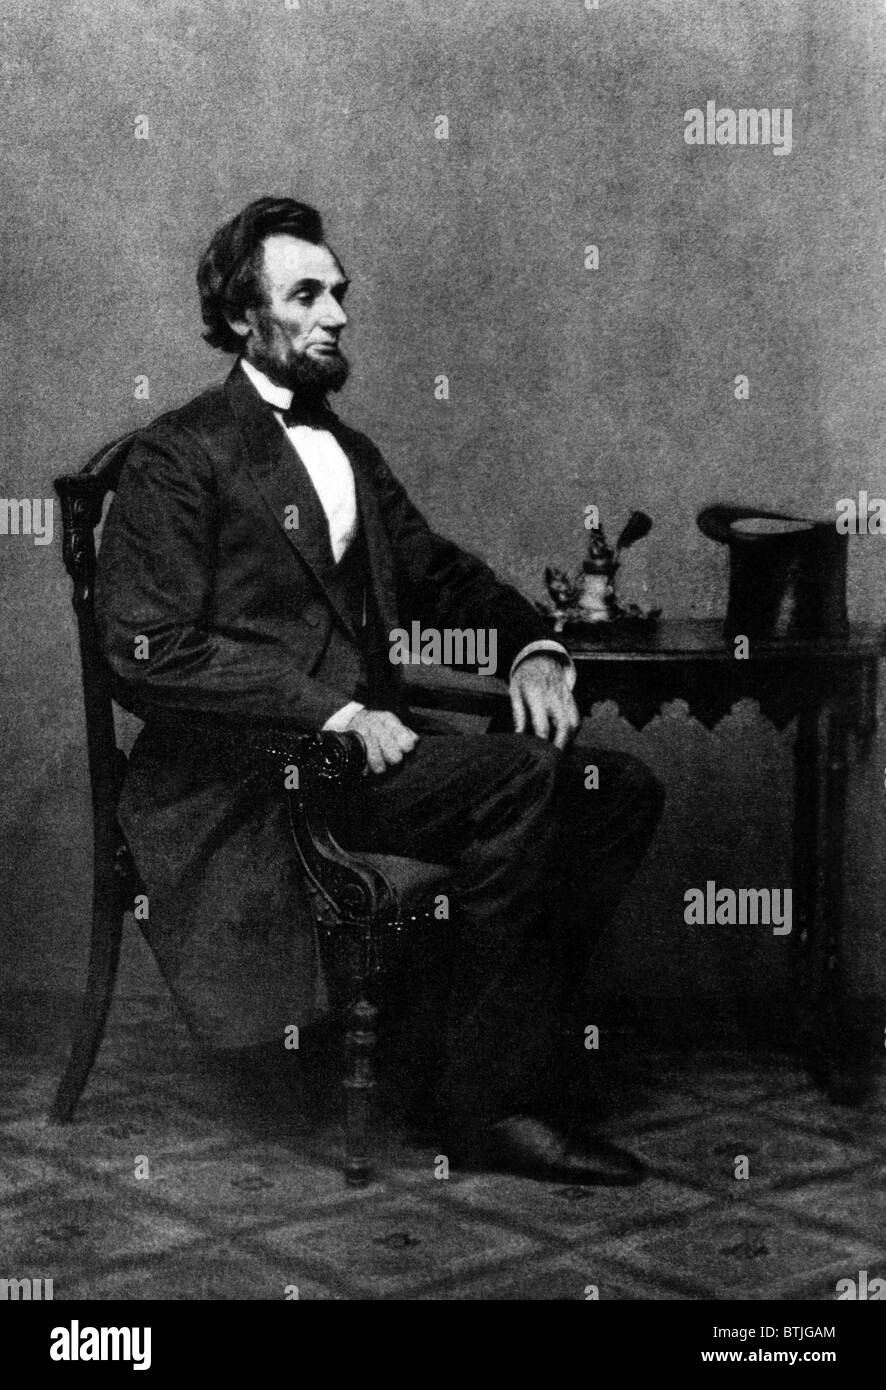 Abraham Lincoln, (1809-1865), U.S. President 1861-1865, in a photograph by Mathew Brady, c 1860's. Stock Photo